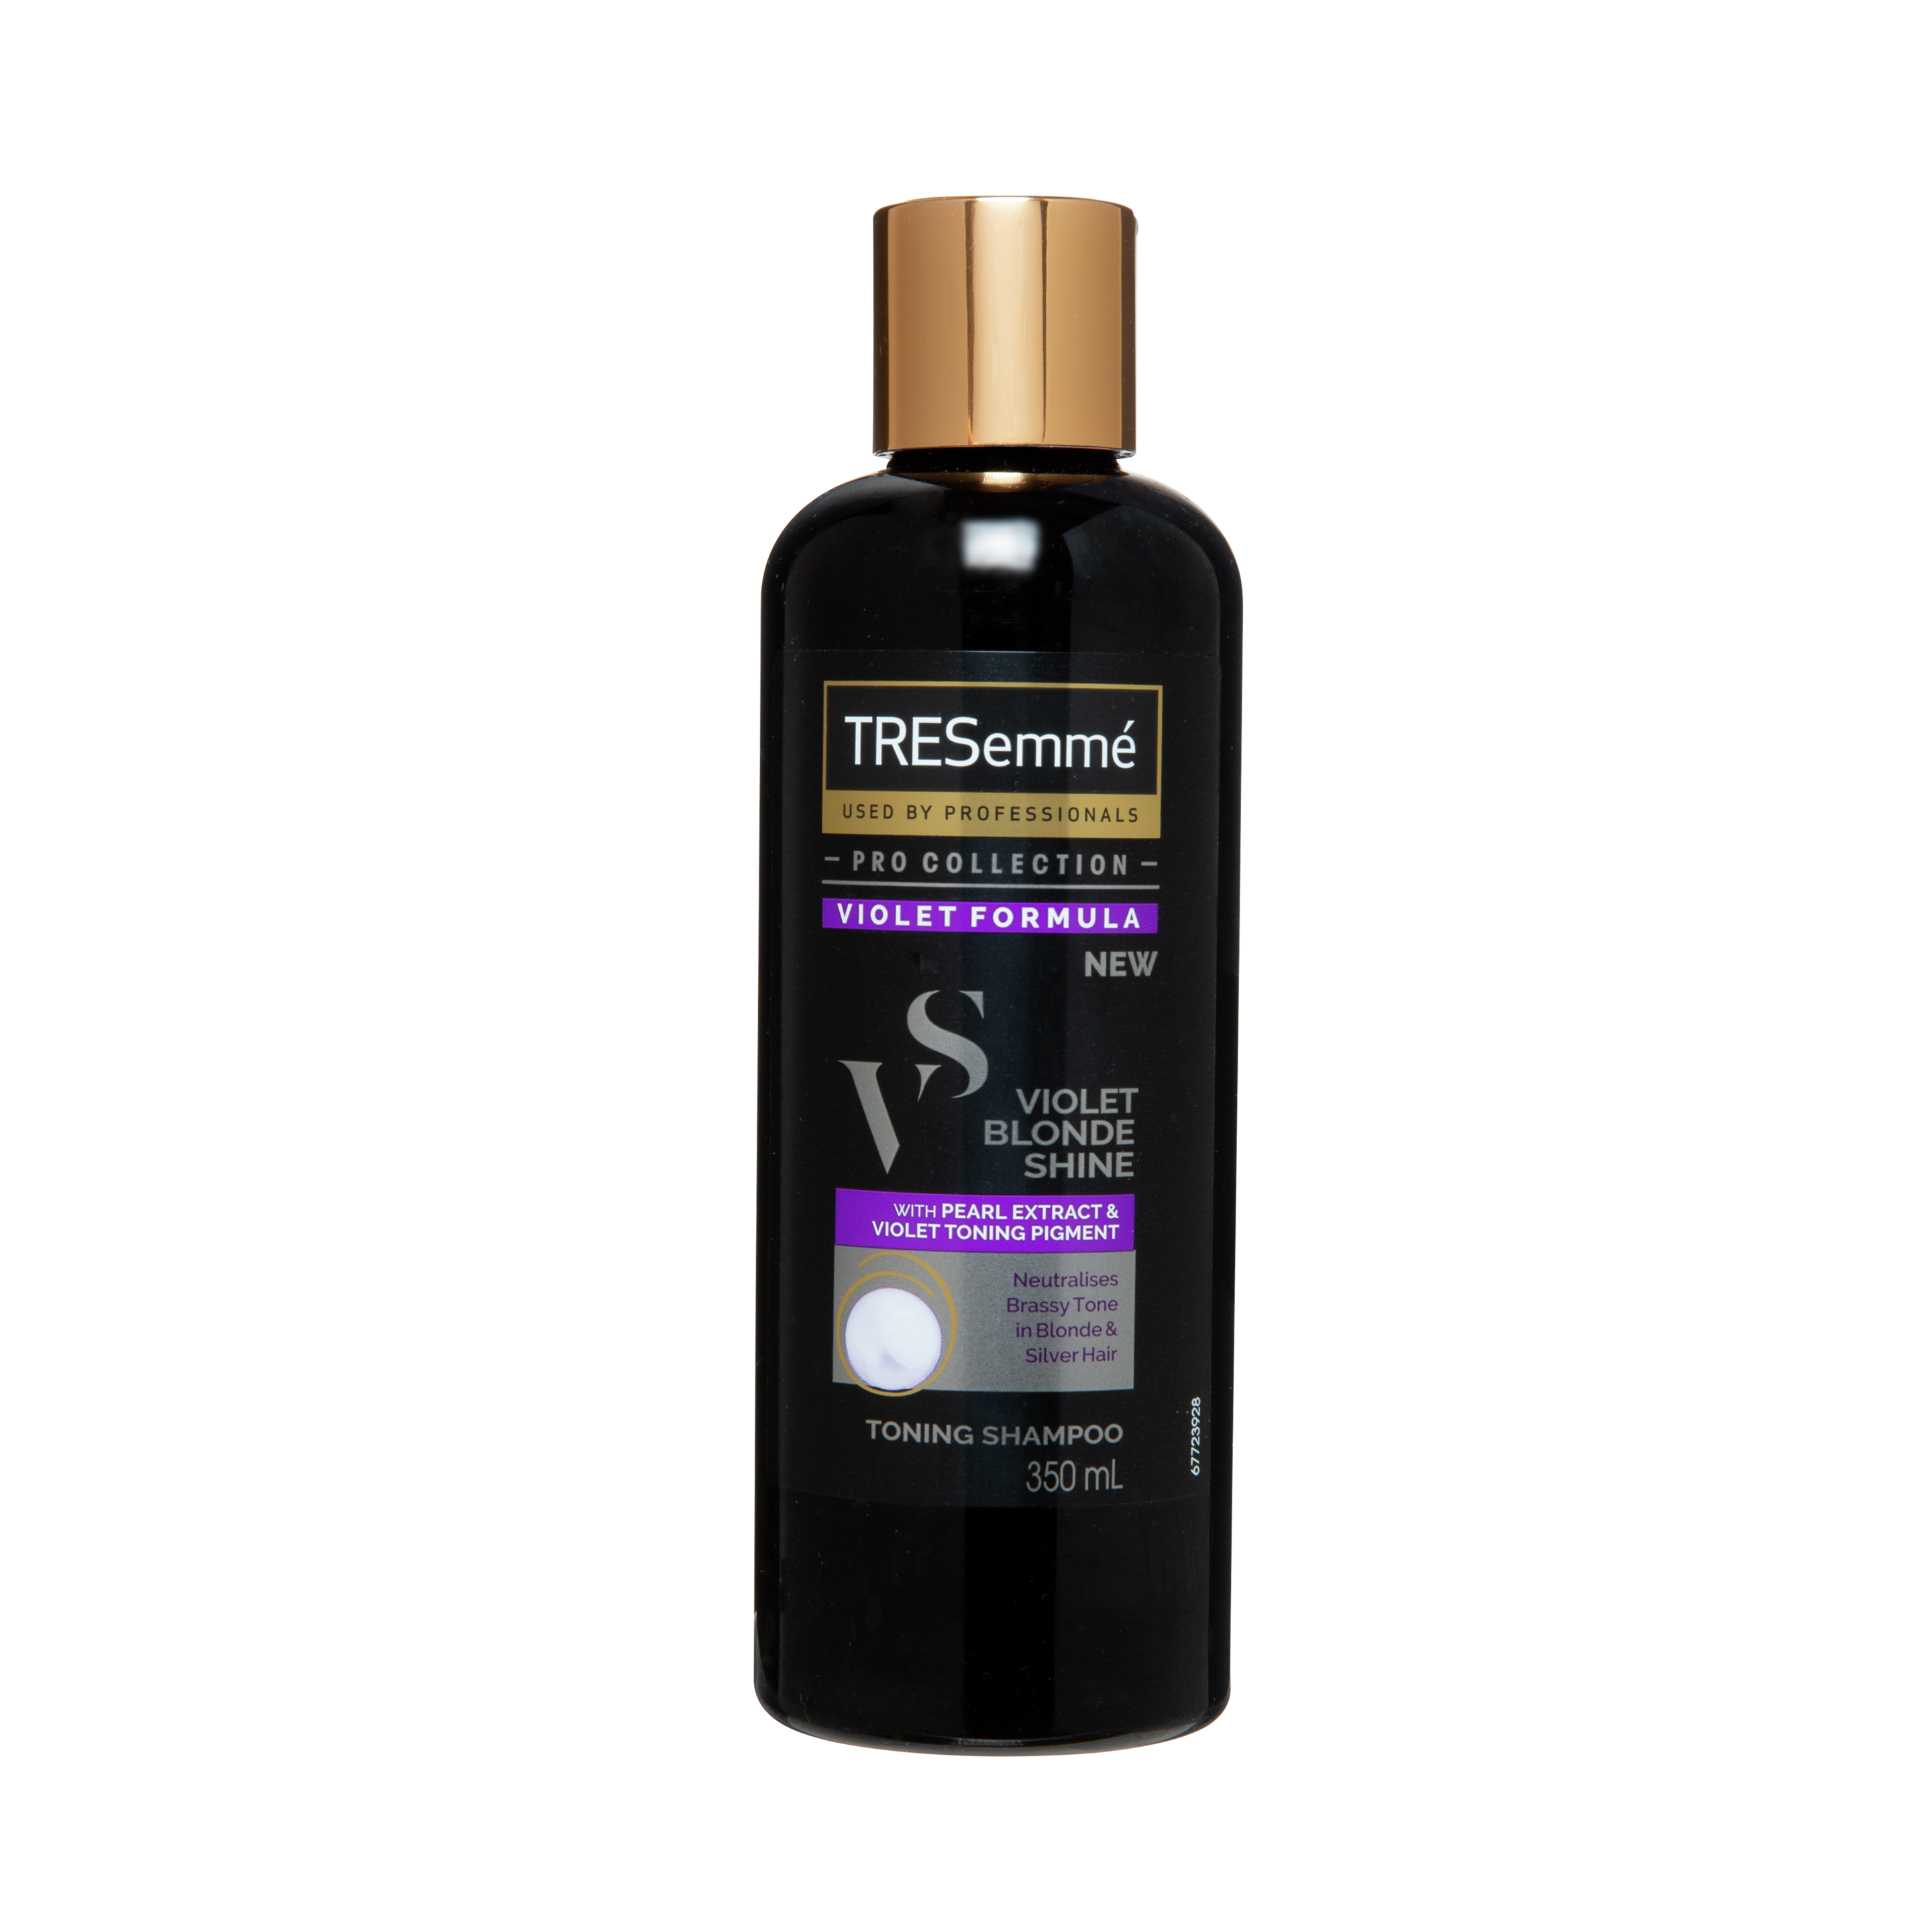 A 350ml bottle of TRESemmé Violet Blonde Shine Shampoo